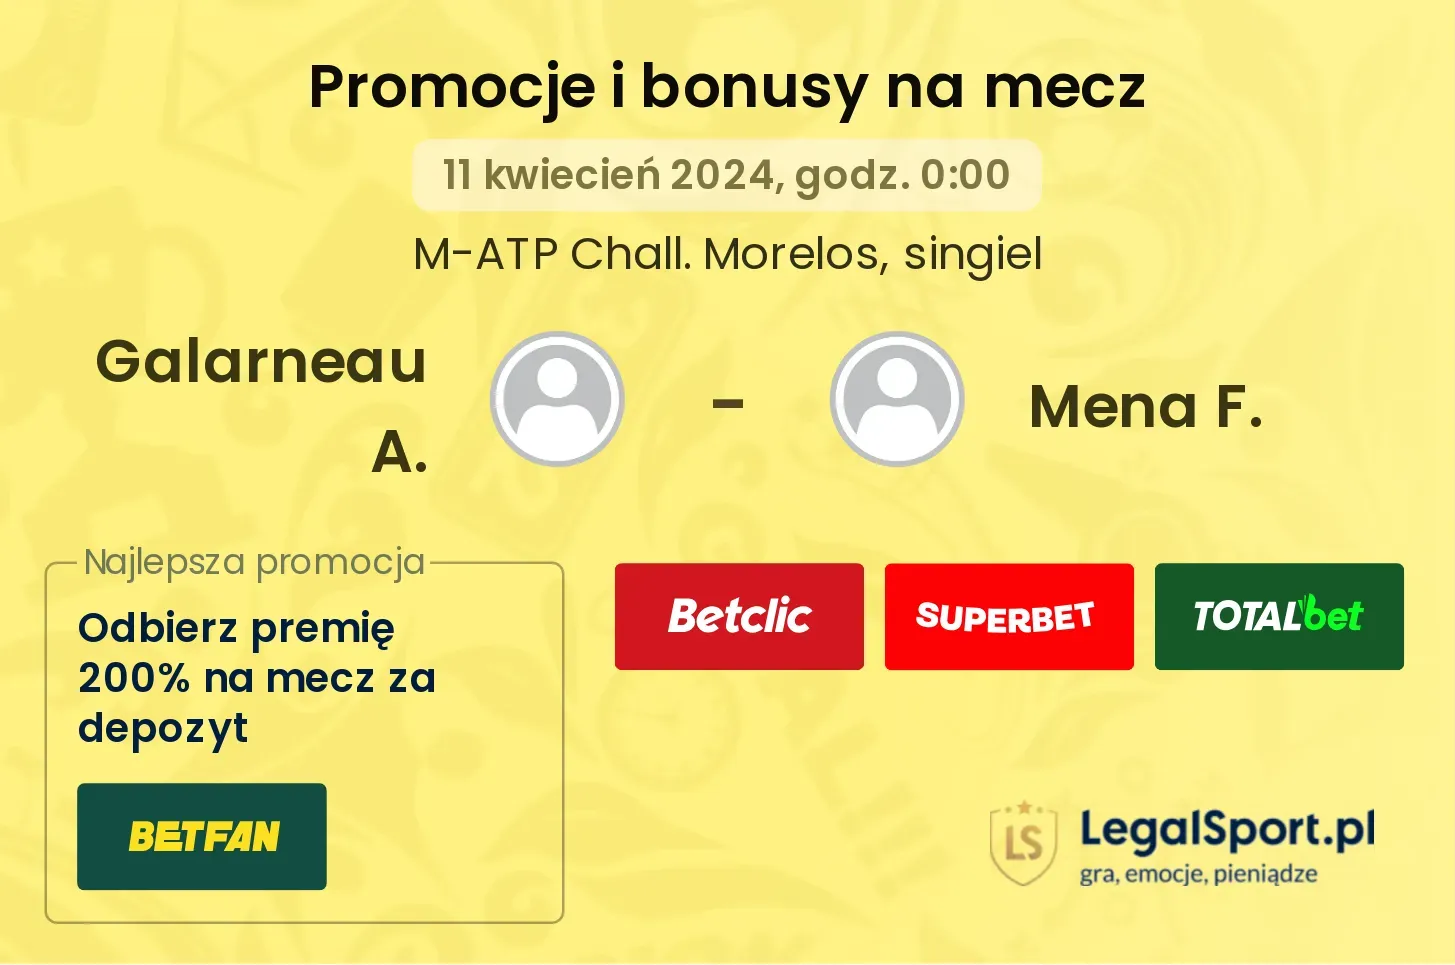 Galarneau A. - Mena F. promocje bonusy na mecz